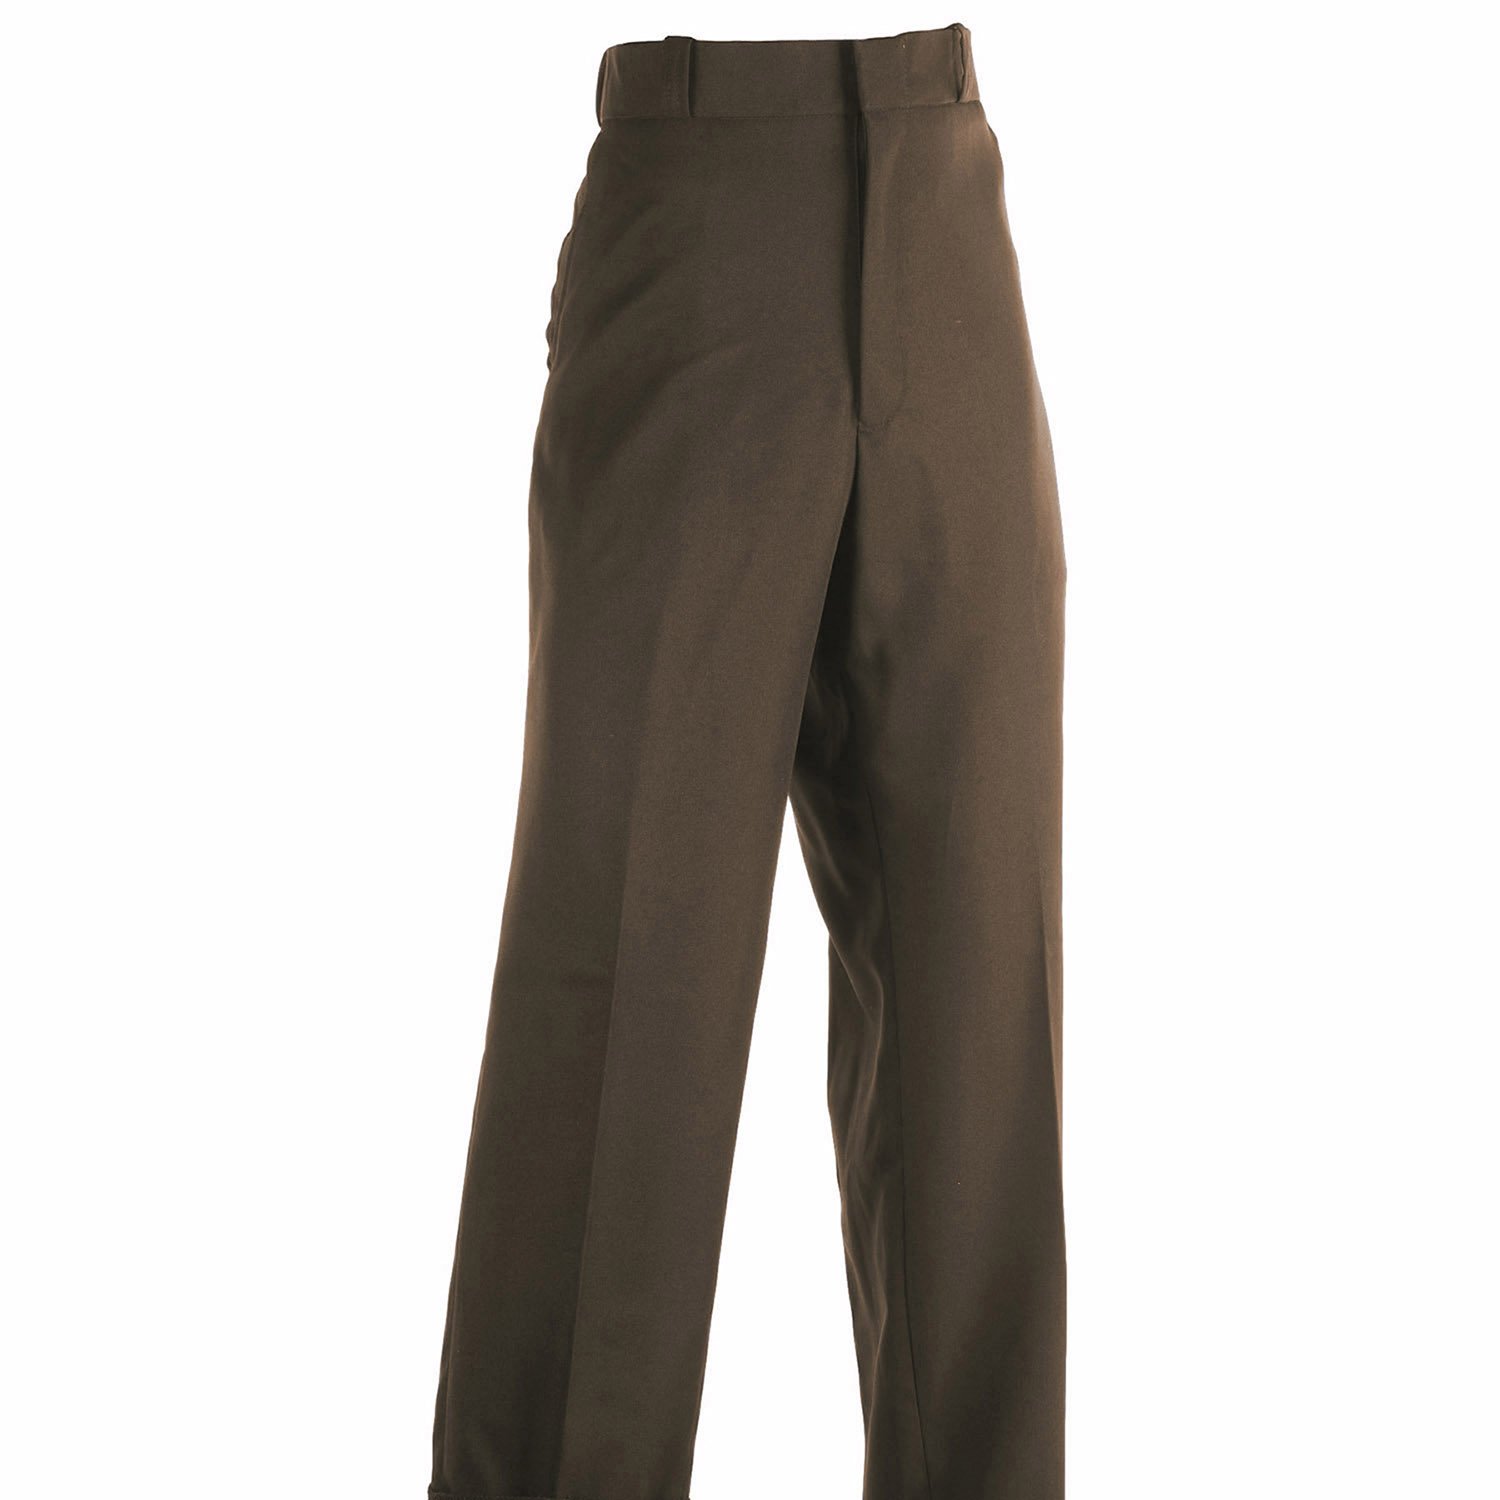 Polyester Uniform Pants 85